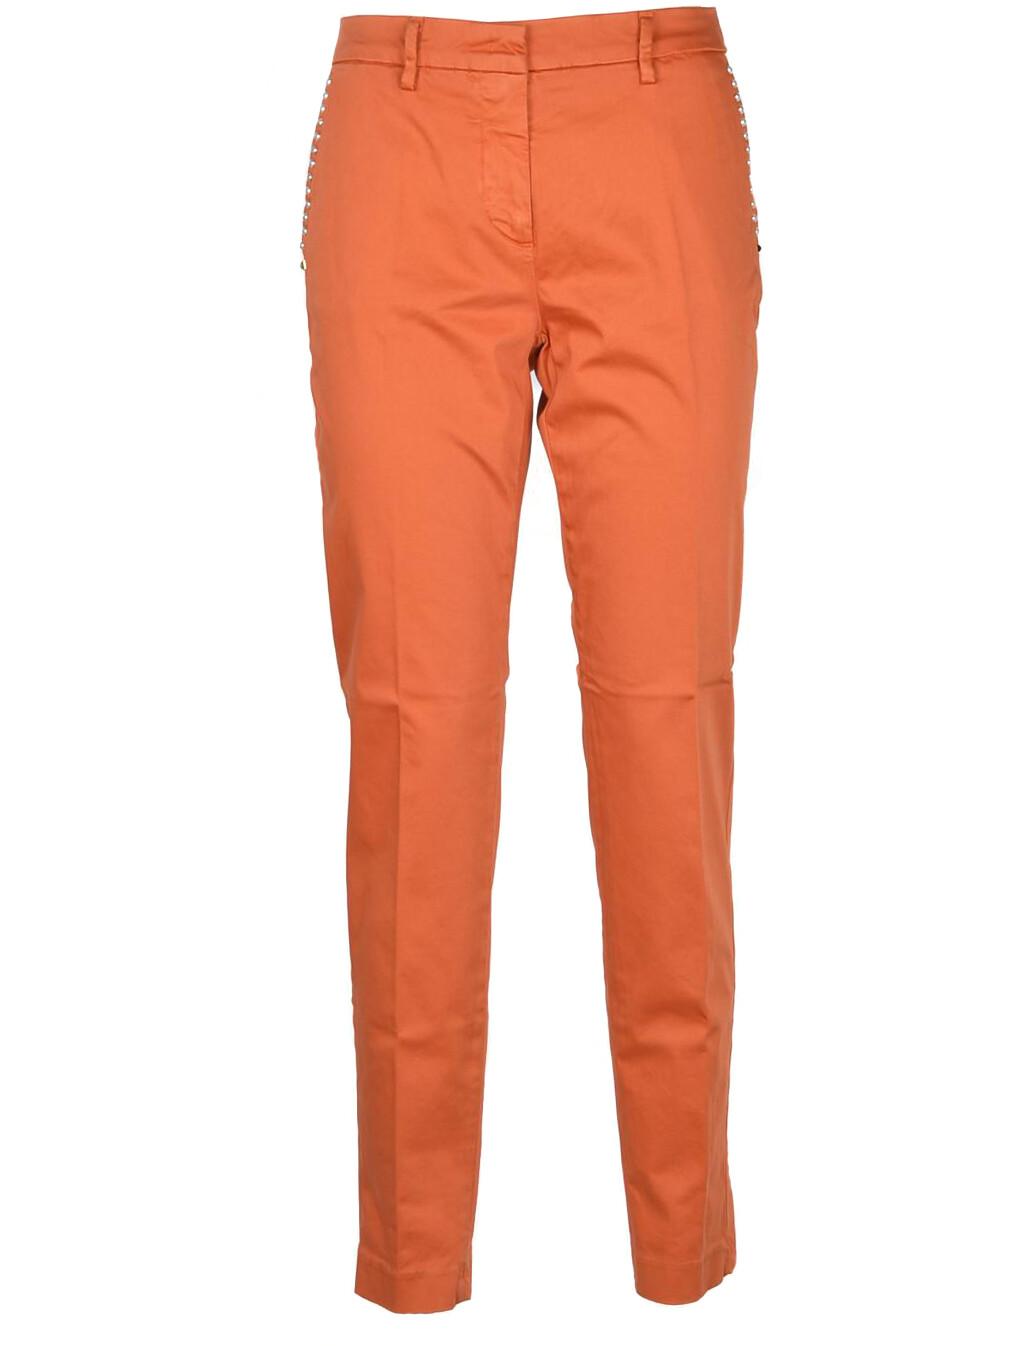 Women's Orange Pants